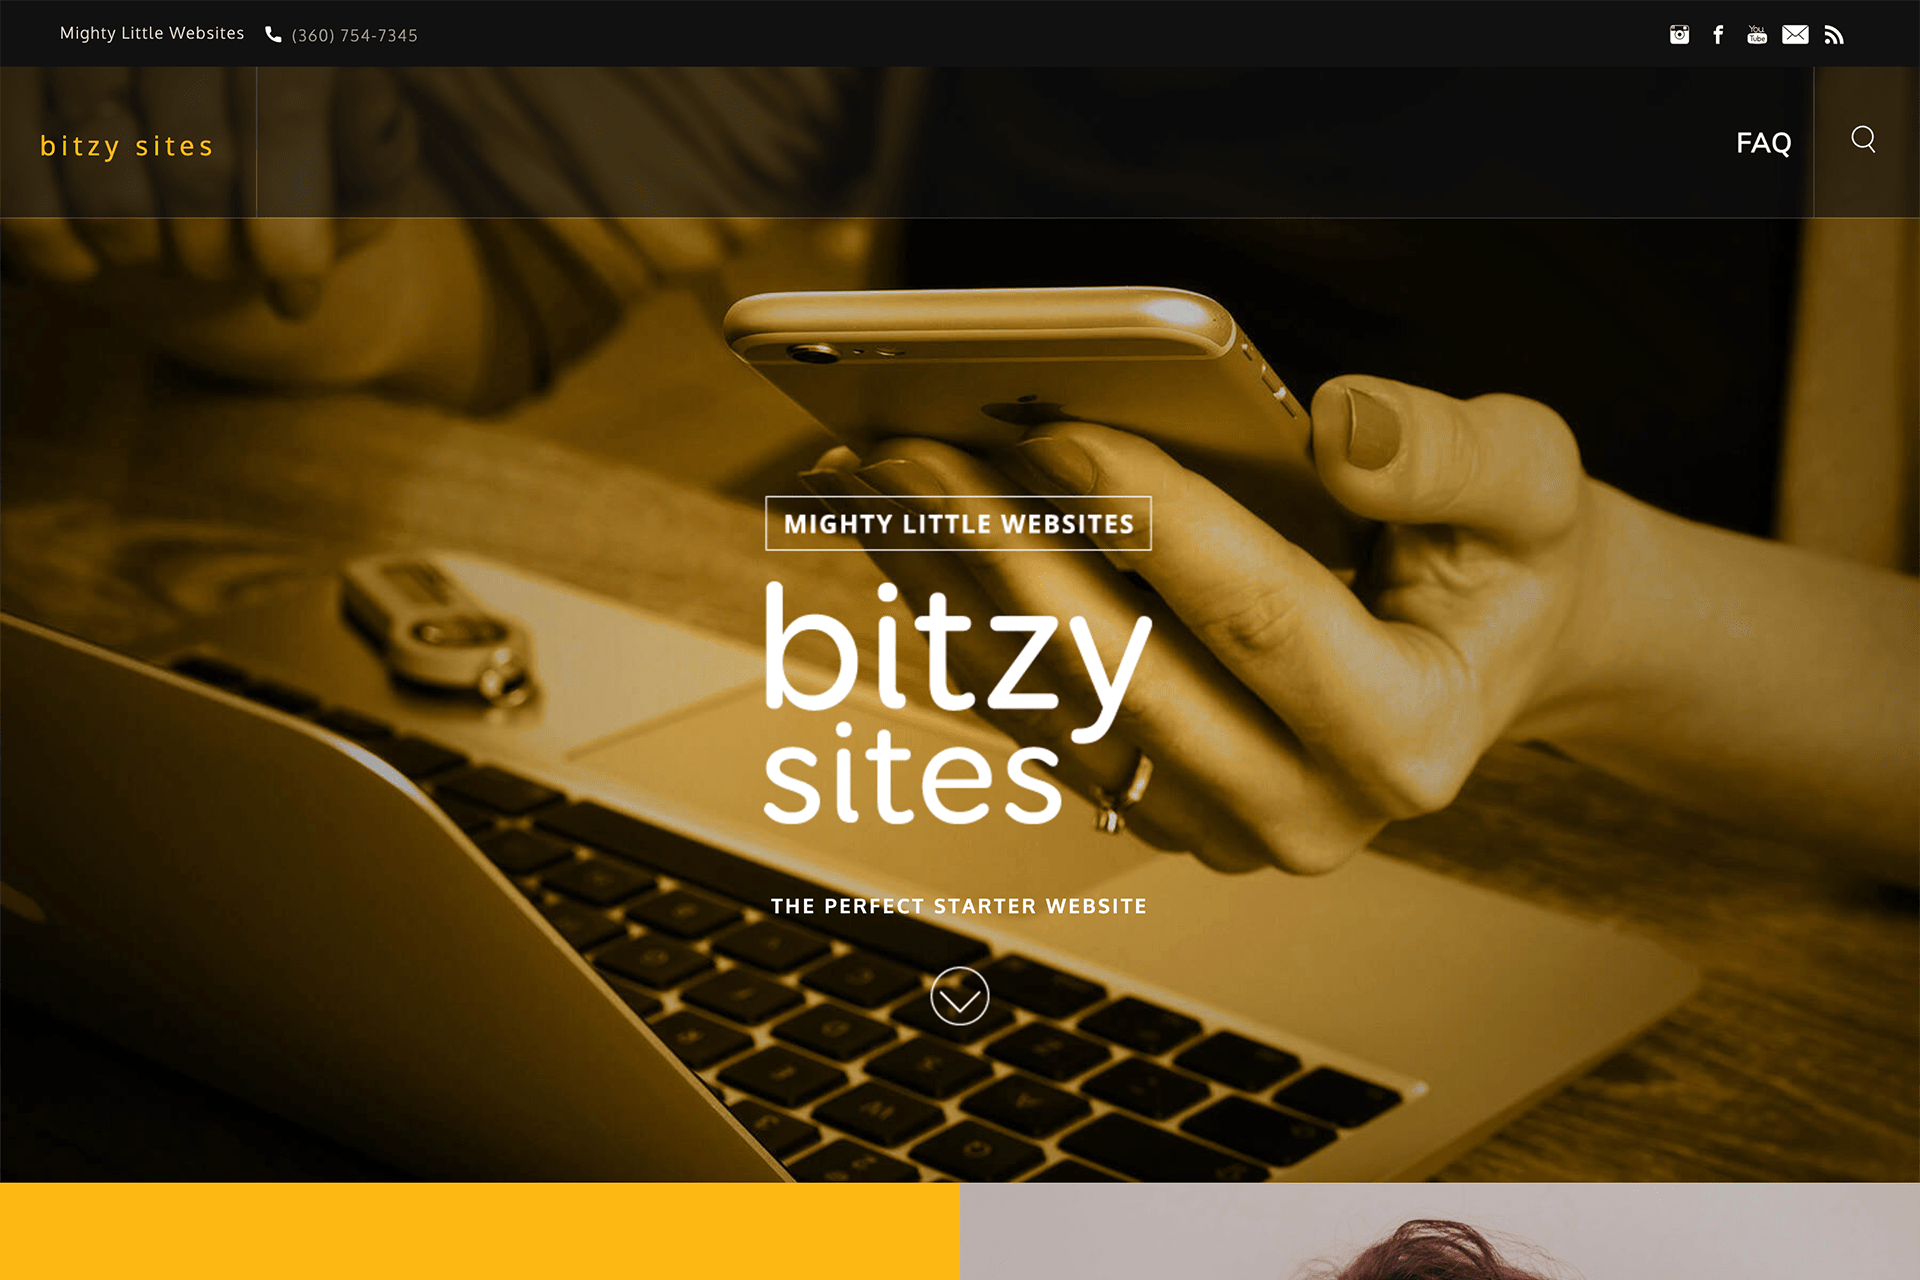 Weebly website example 8 - Bitzy Sites